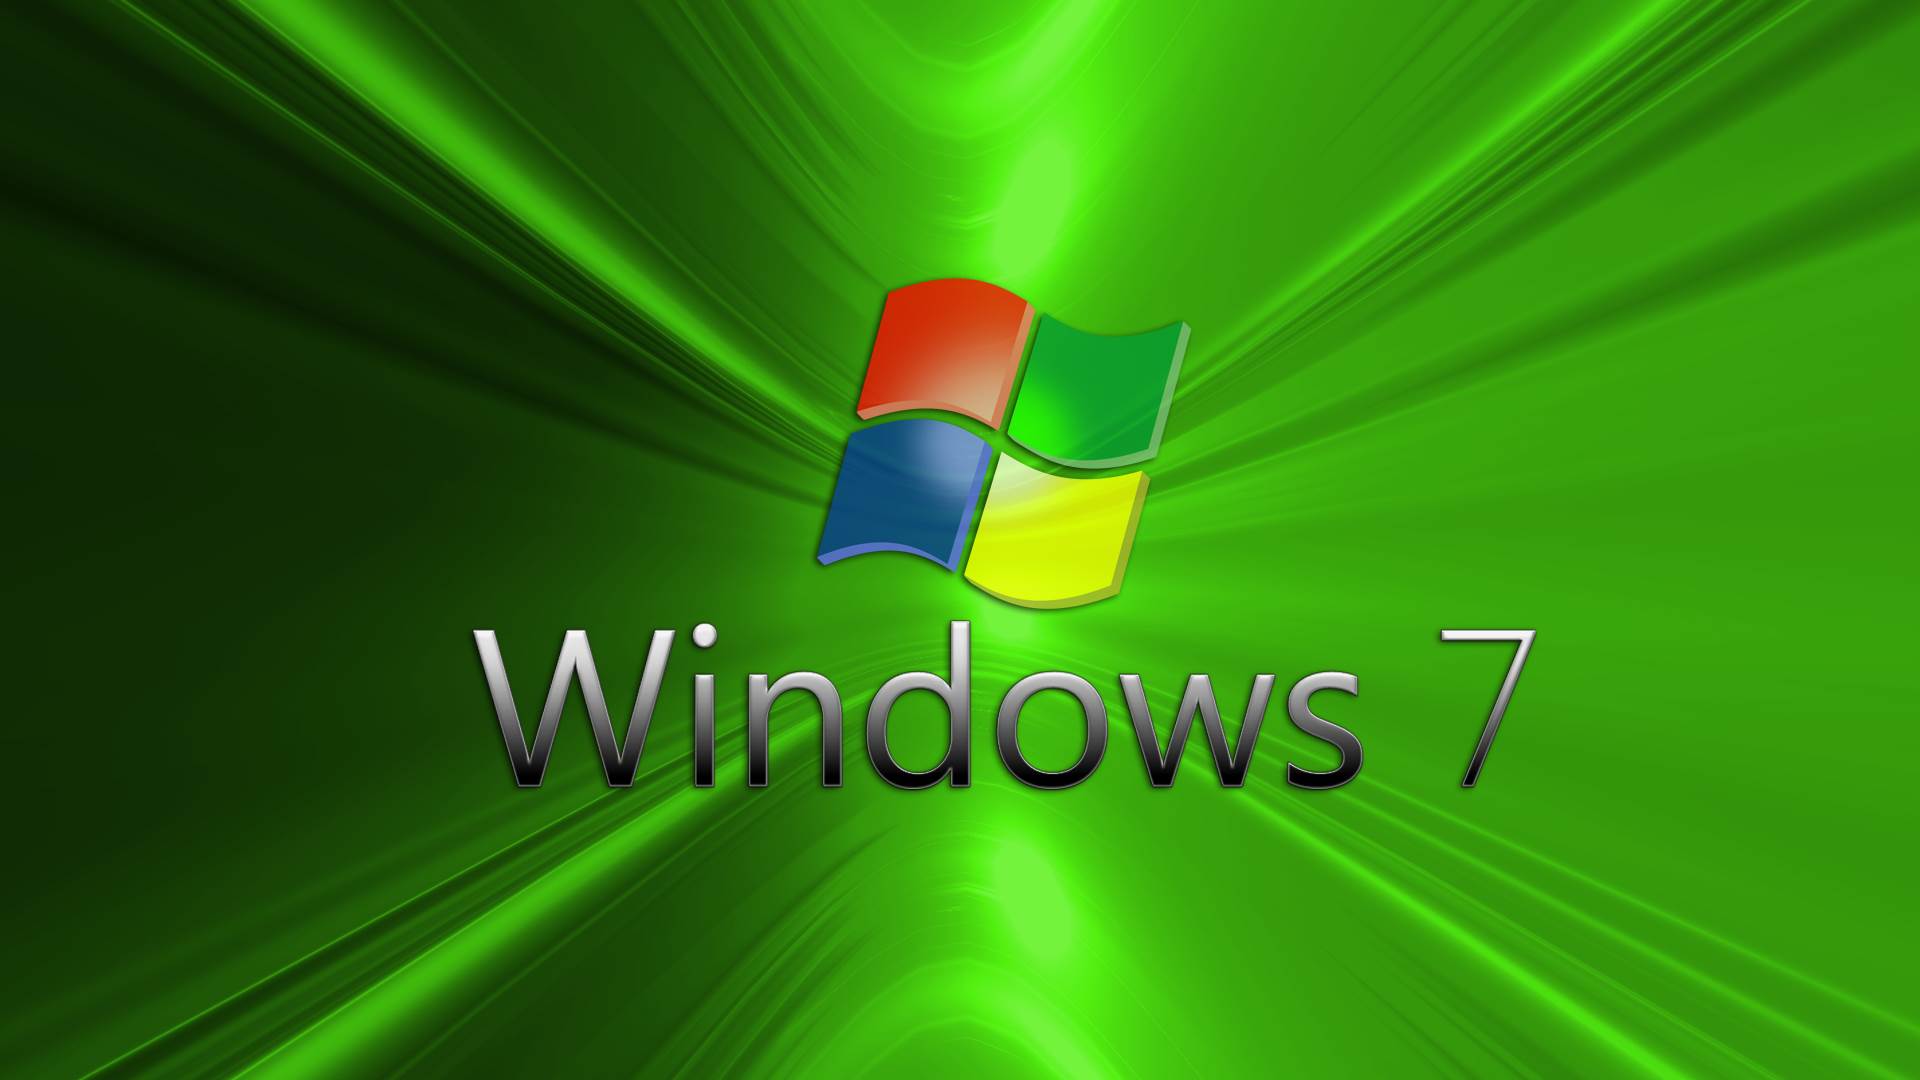 Компьютер на телефон виндовс 7. Картинки Windows 7. Windows 7 рабочий стол. Заставка Windows 7. Обои на рабочий стол виндовс 7.